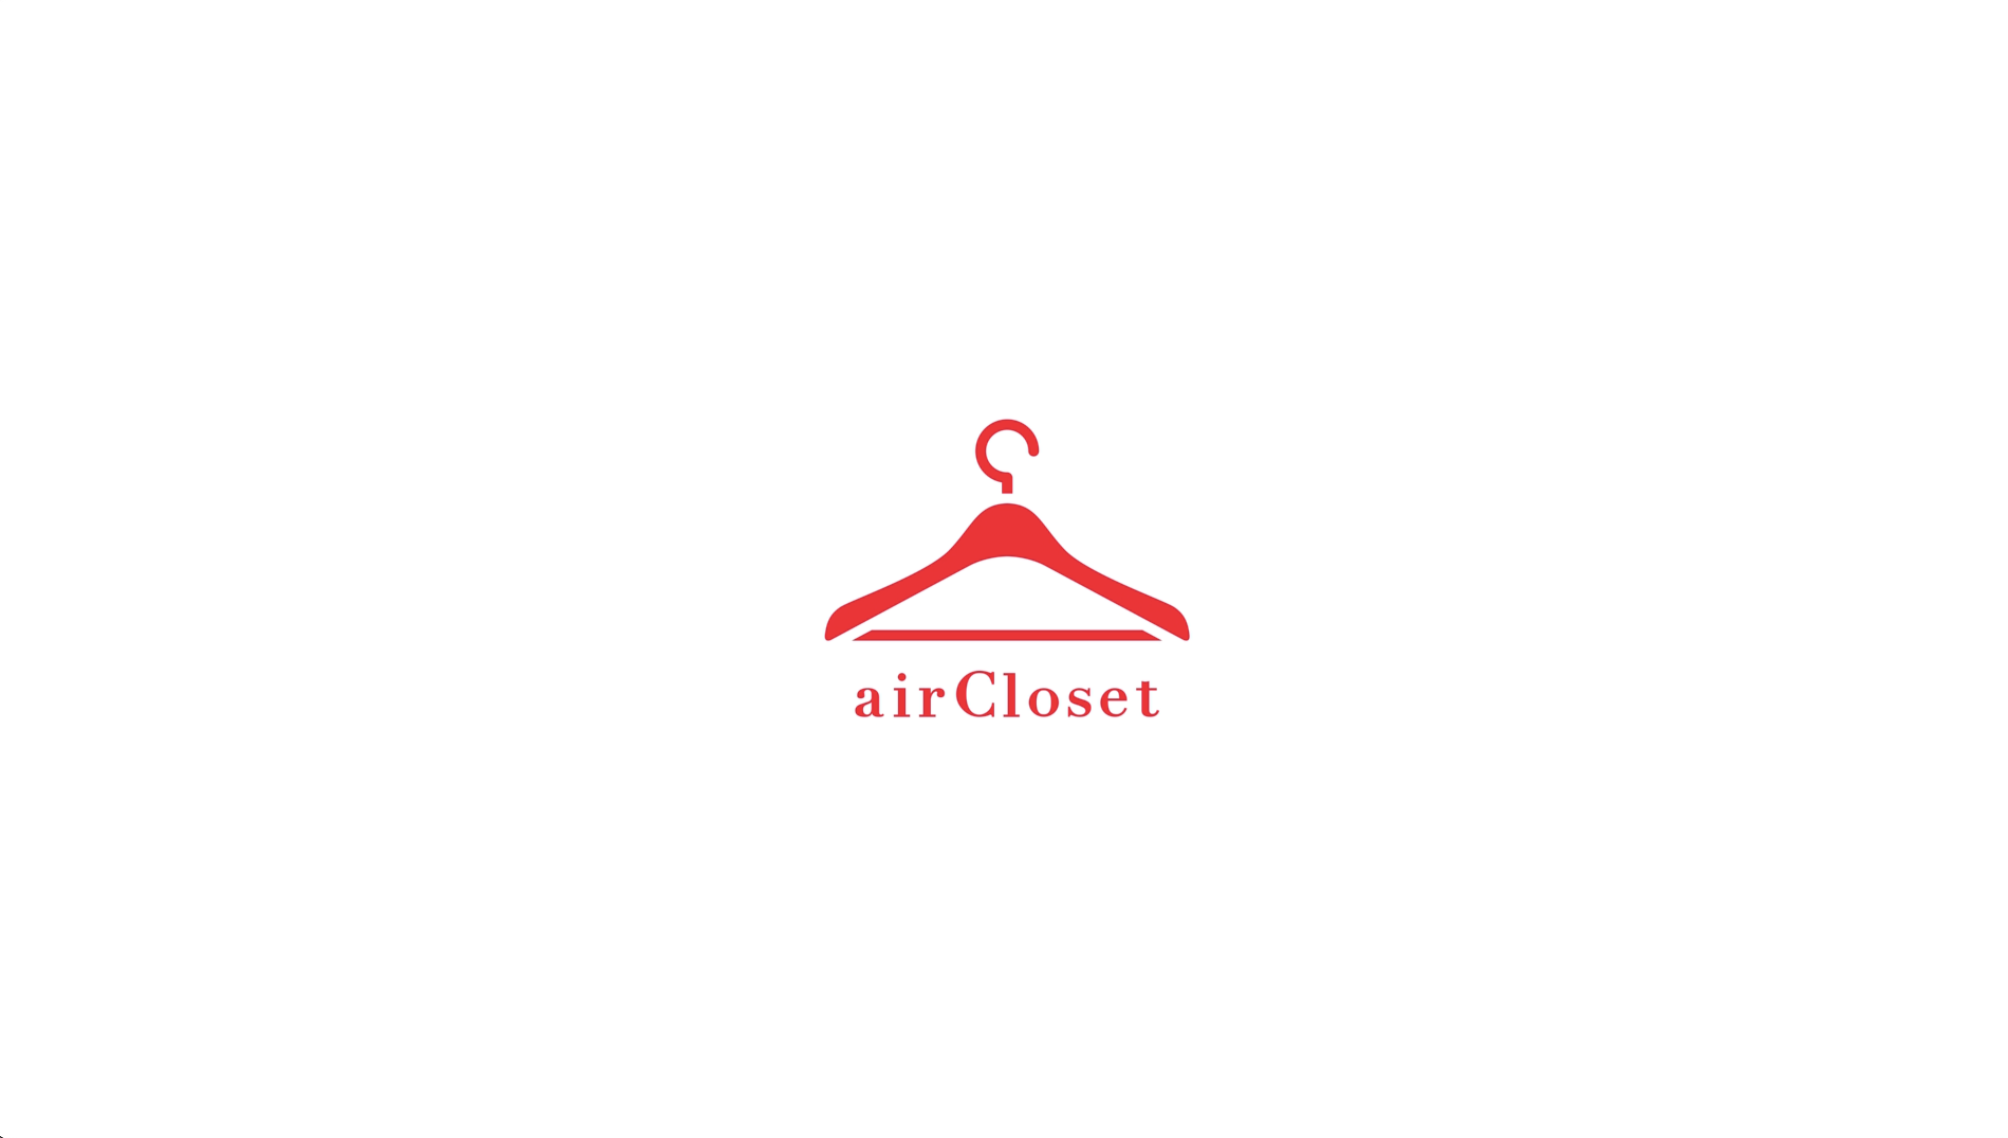 Air closet